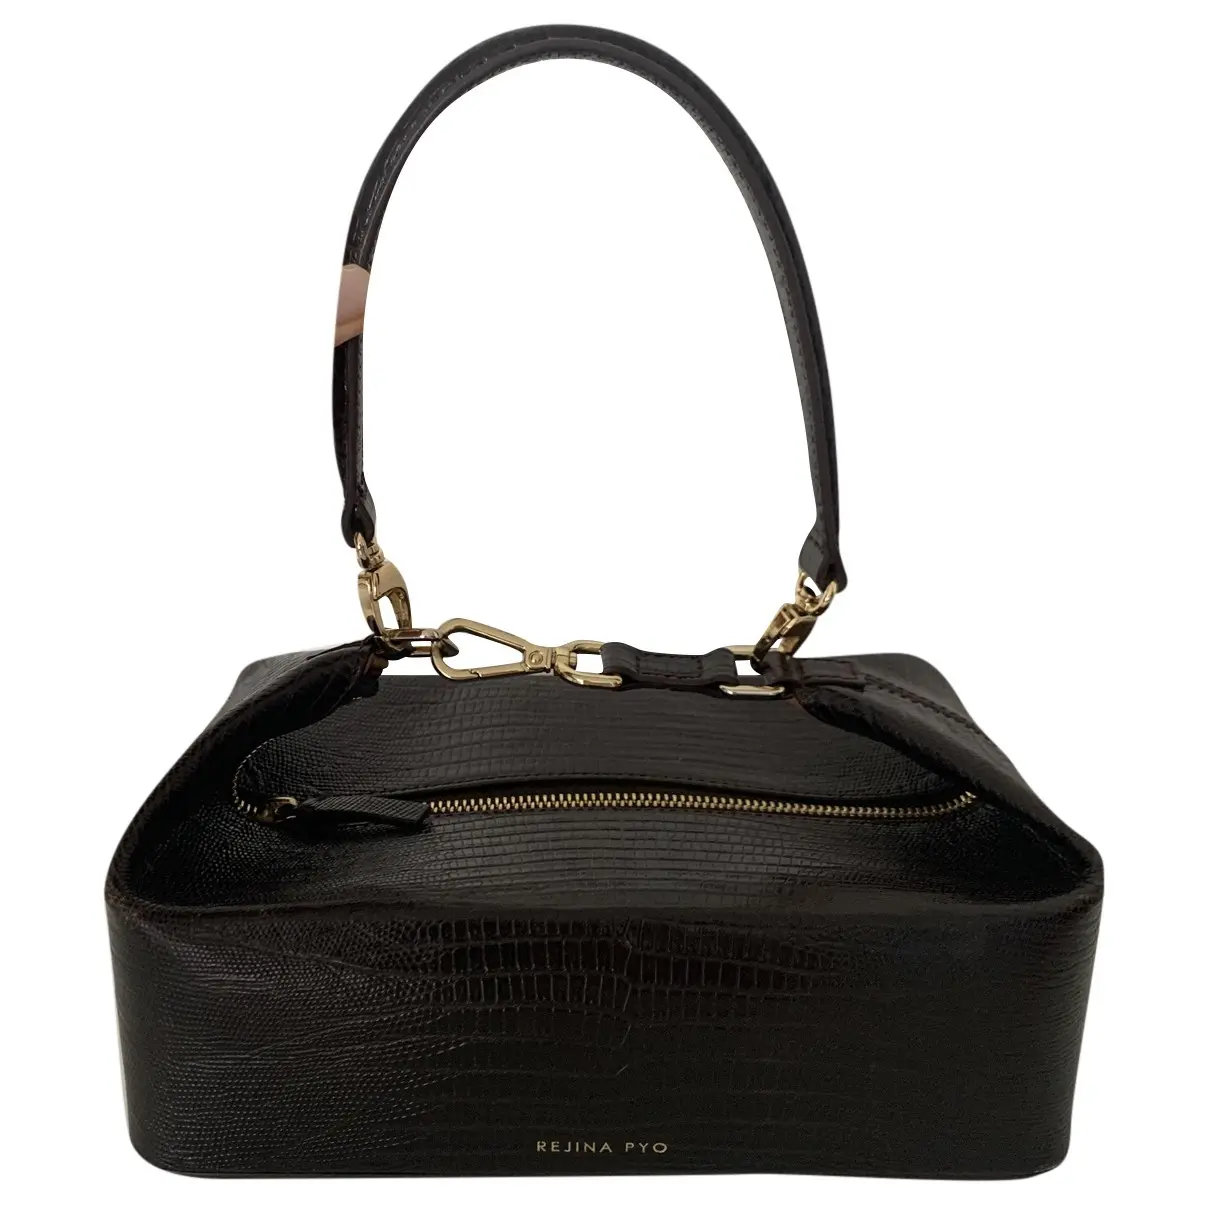 Leather handbag Rejina Pyo